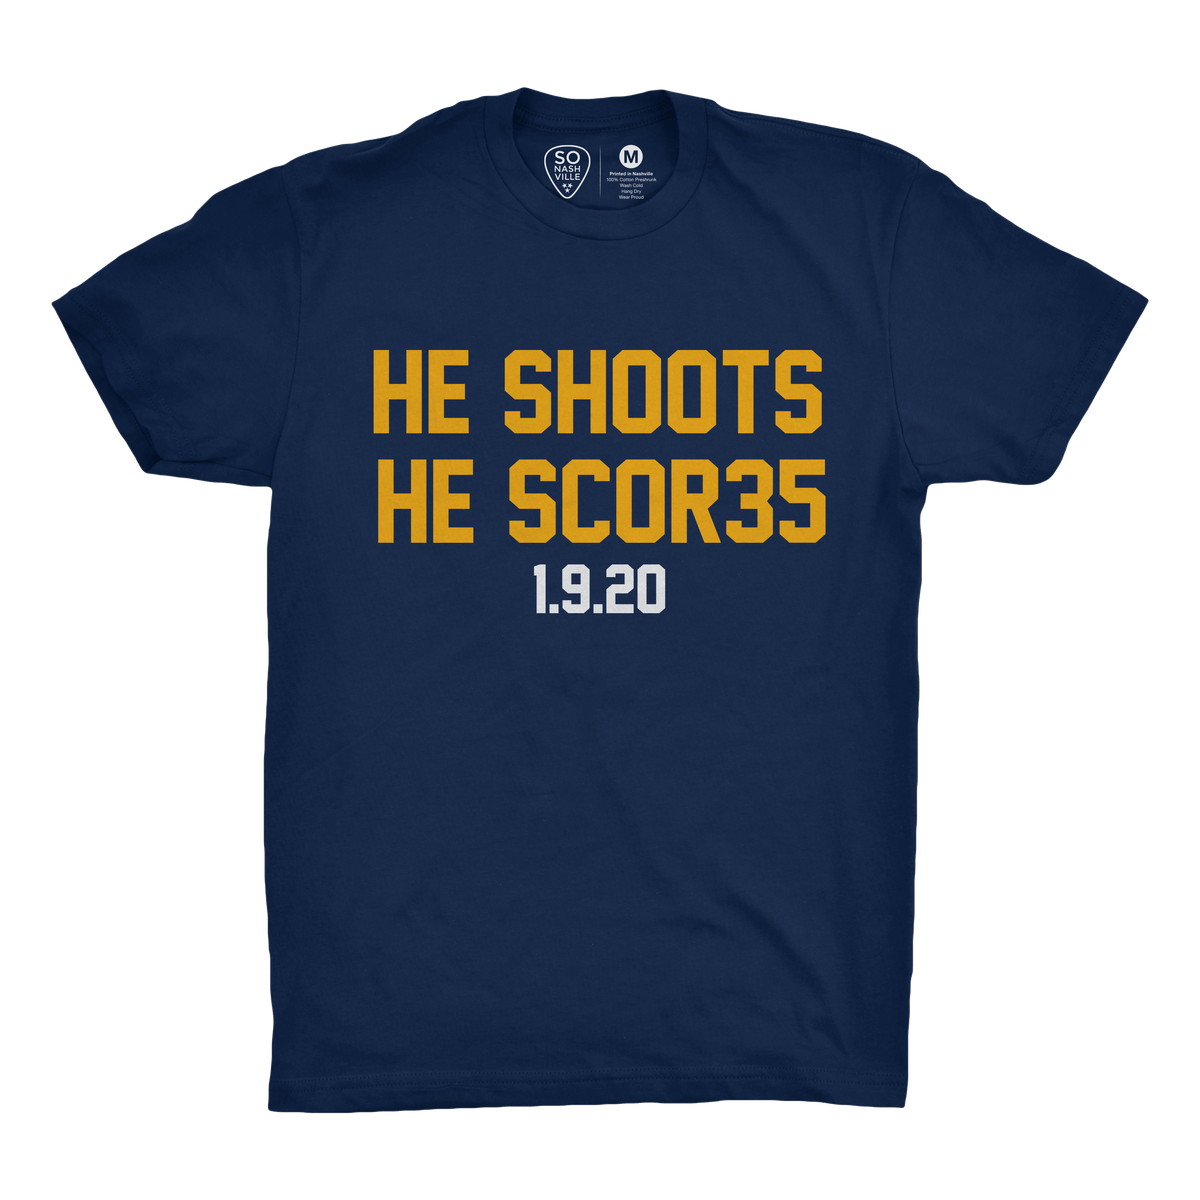 He Shoots He Scor35 - So Nashville Clothing